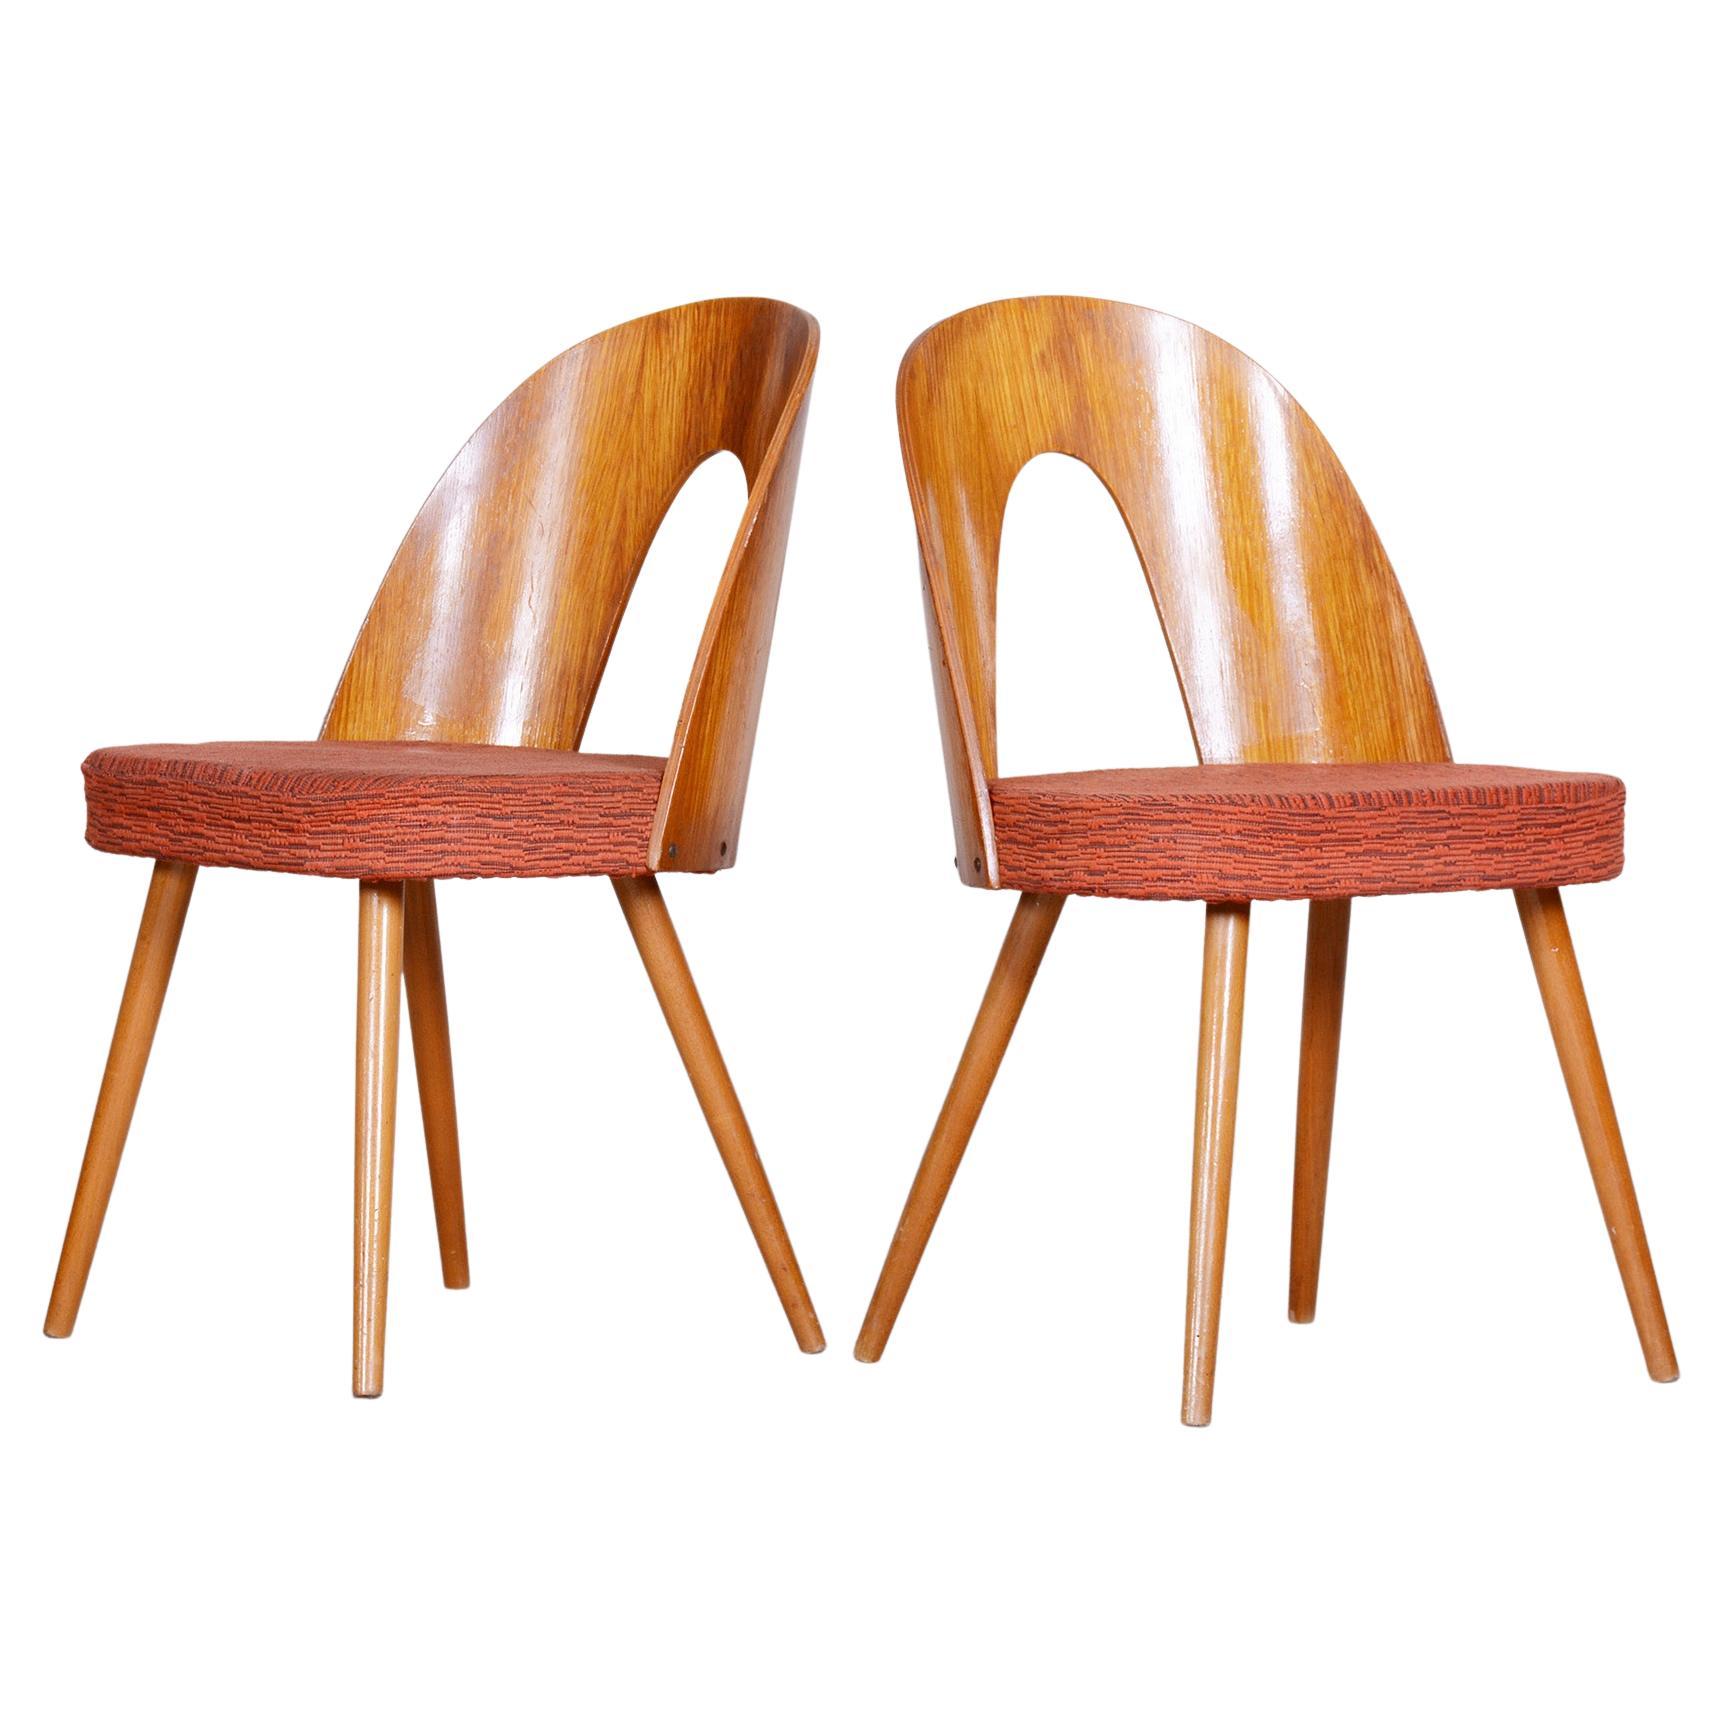 Pair of Mid Century Chairs Made in 1950s Czechia, Designed by Antonín Šuman